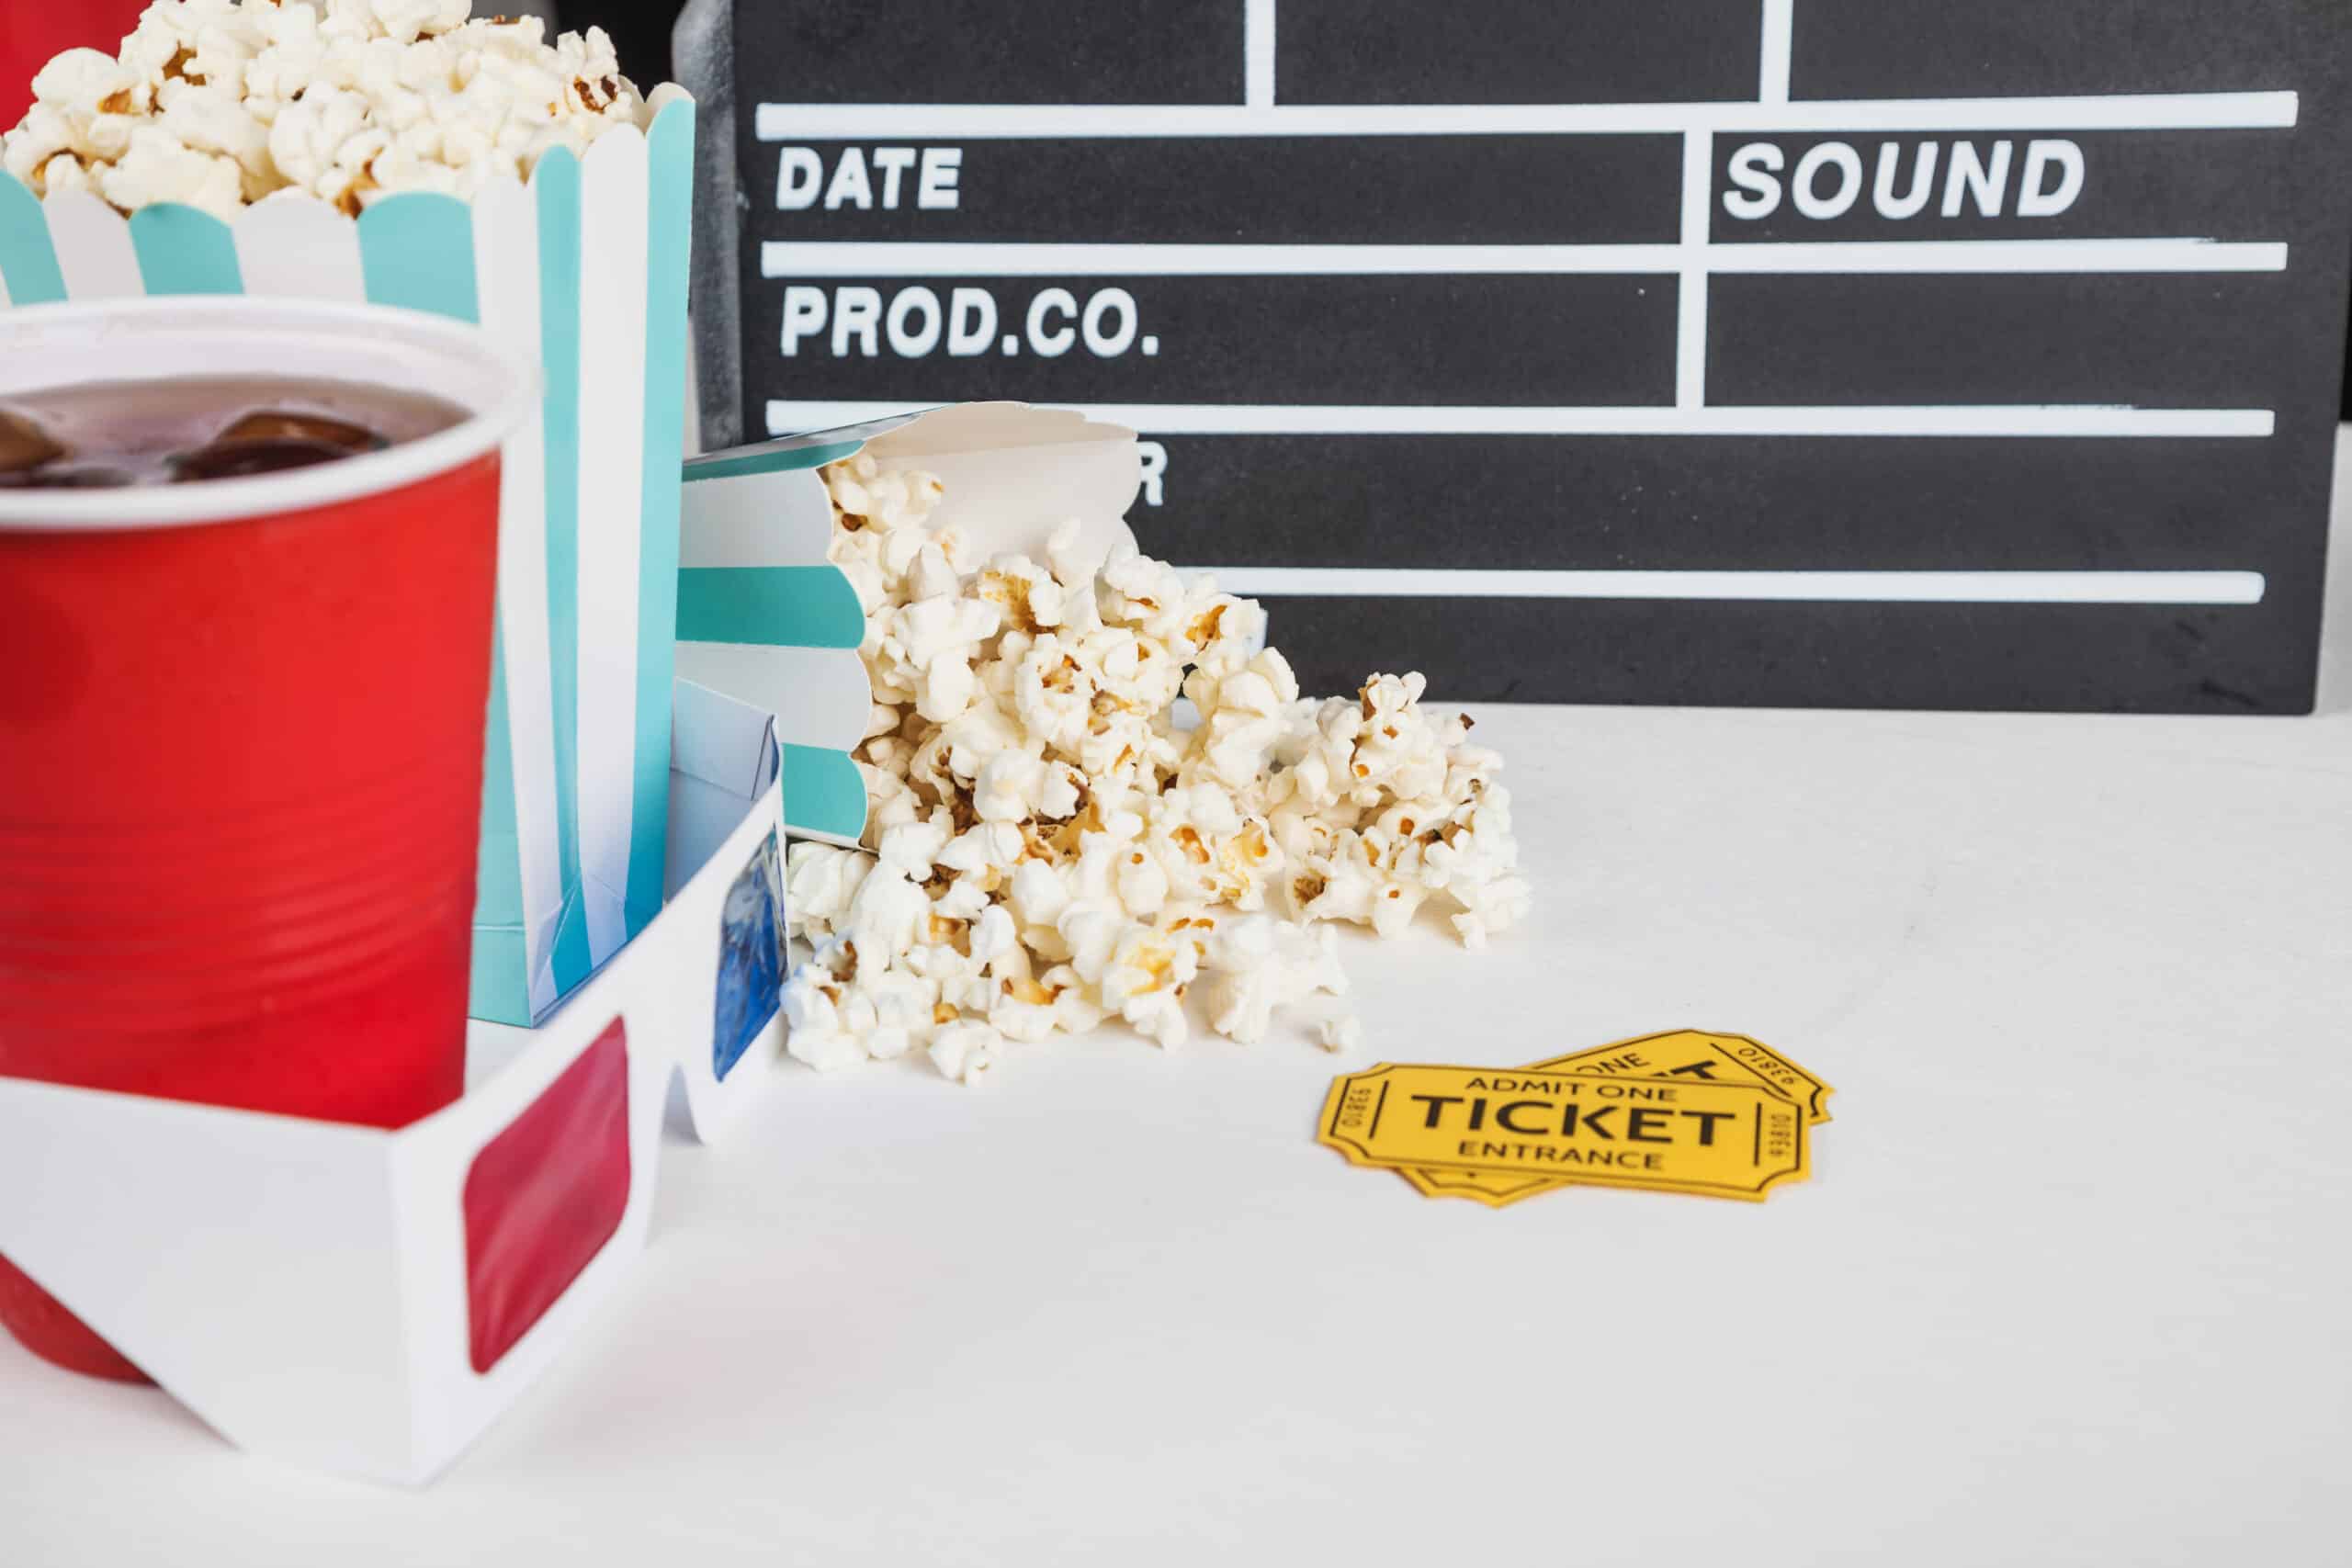 cinema stuff clapper popcorn 3d glasses ticket